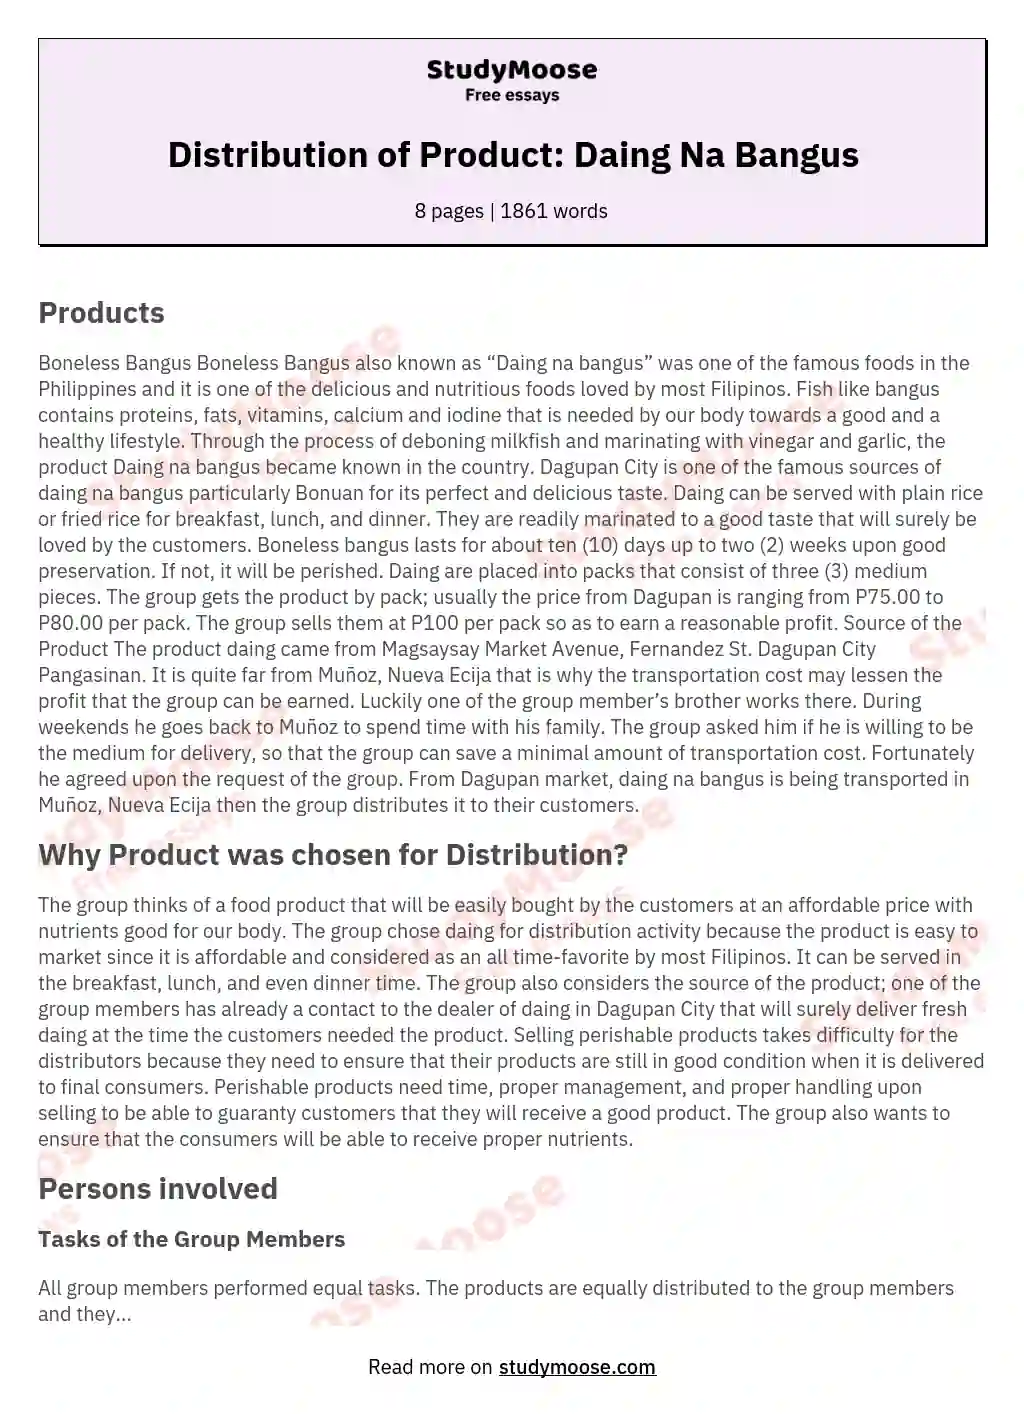 Distribution of Product: Daing Na Bangus essay